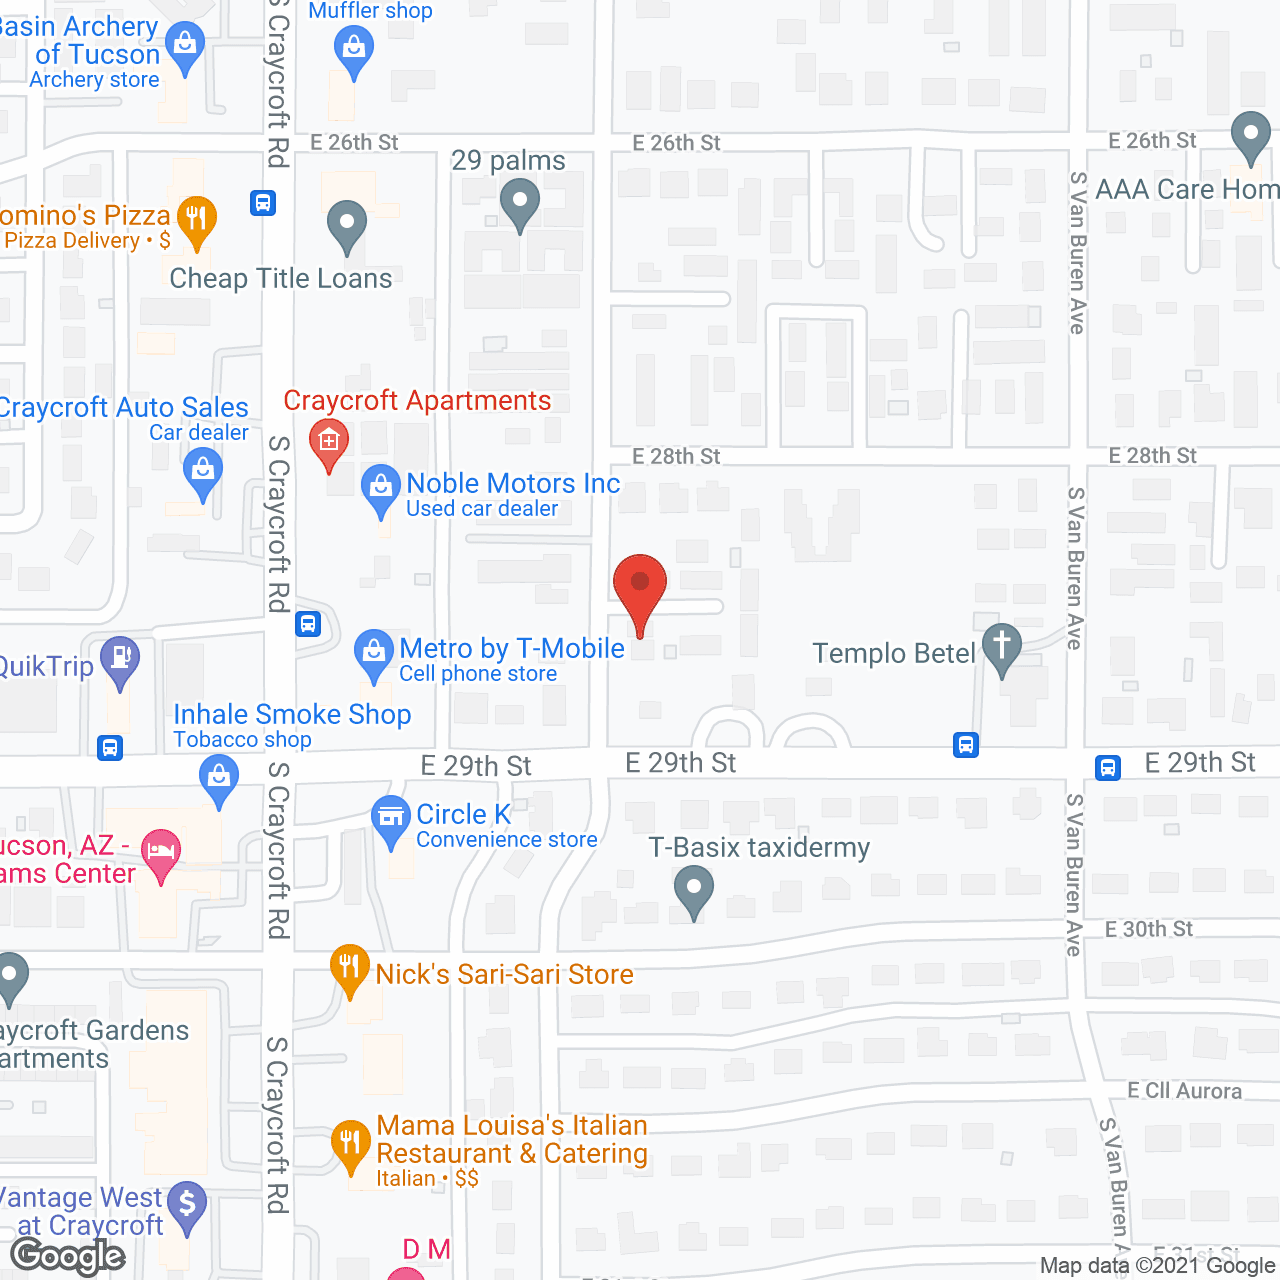 Jefferson Village in google map